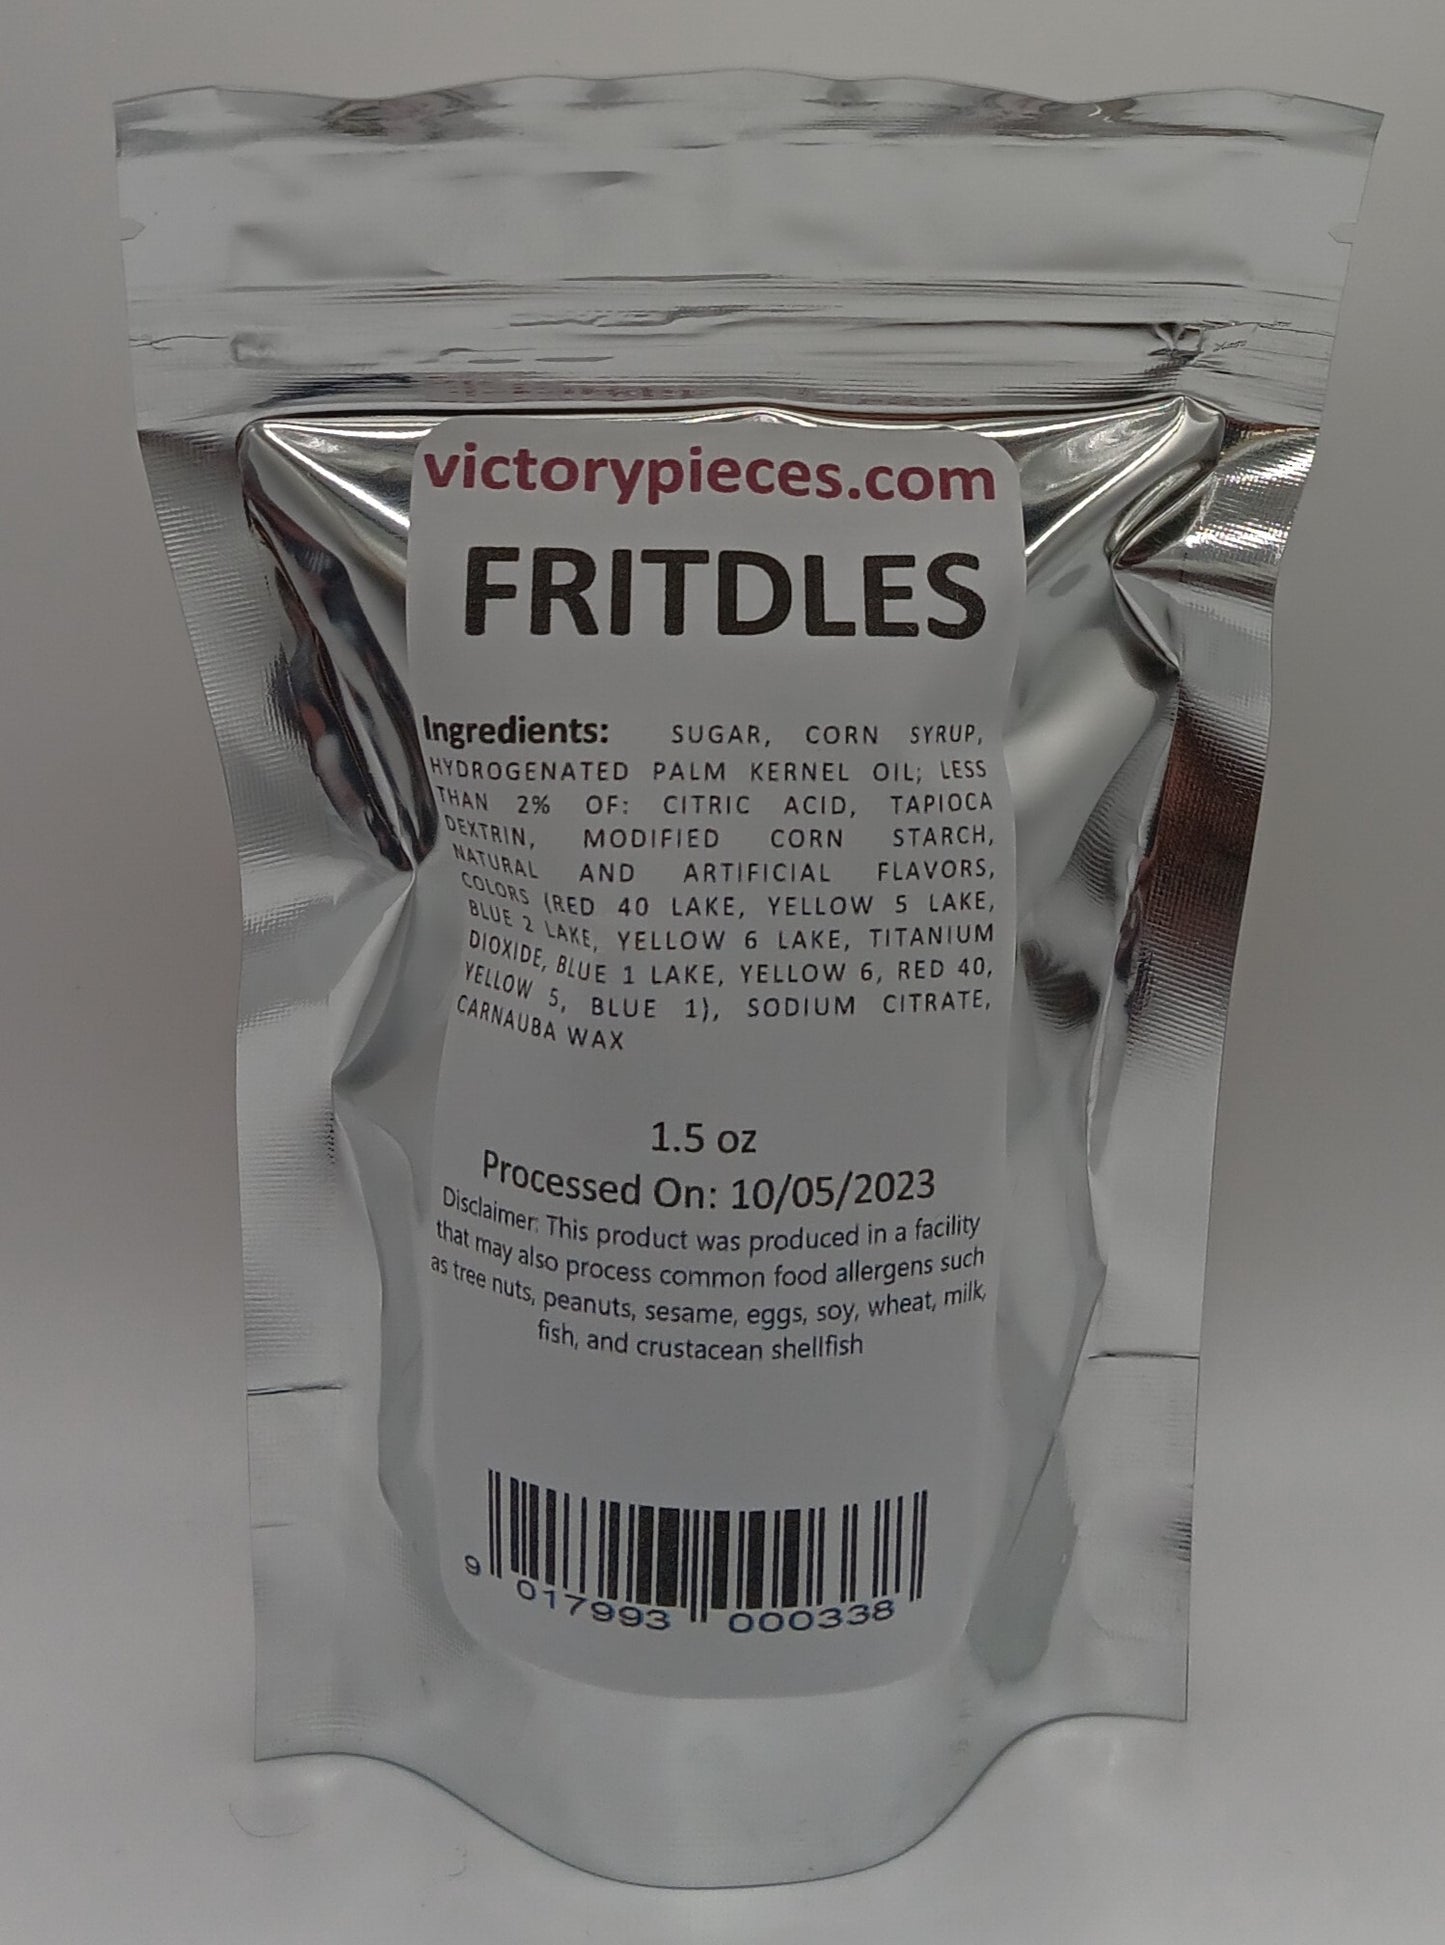 Fritdles